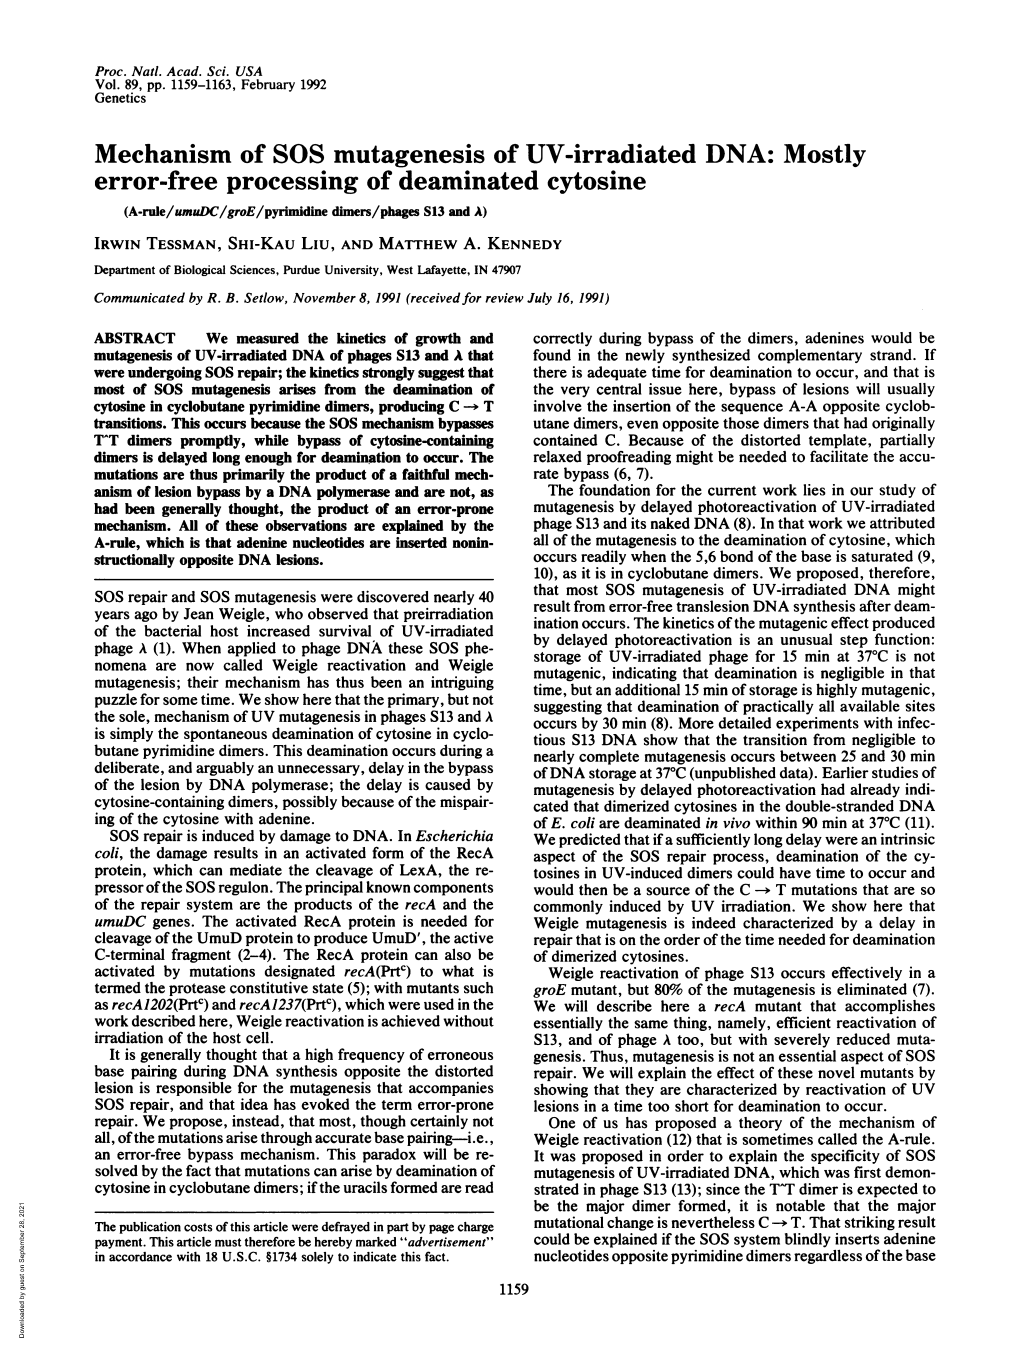 Mechanism of SOS Mutagenesis of UV-Irradiated